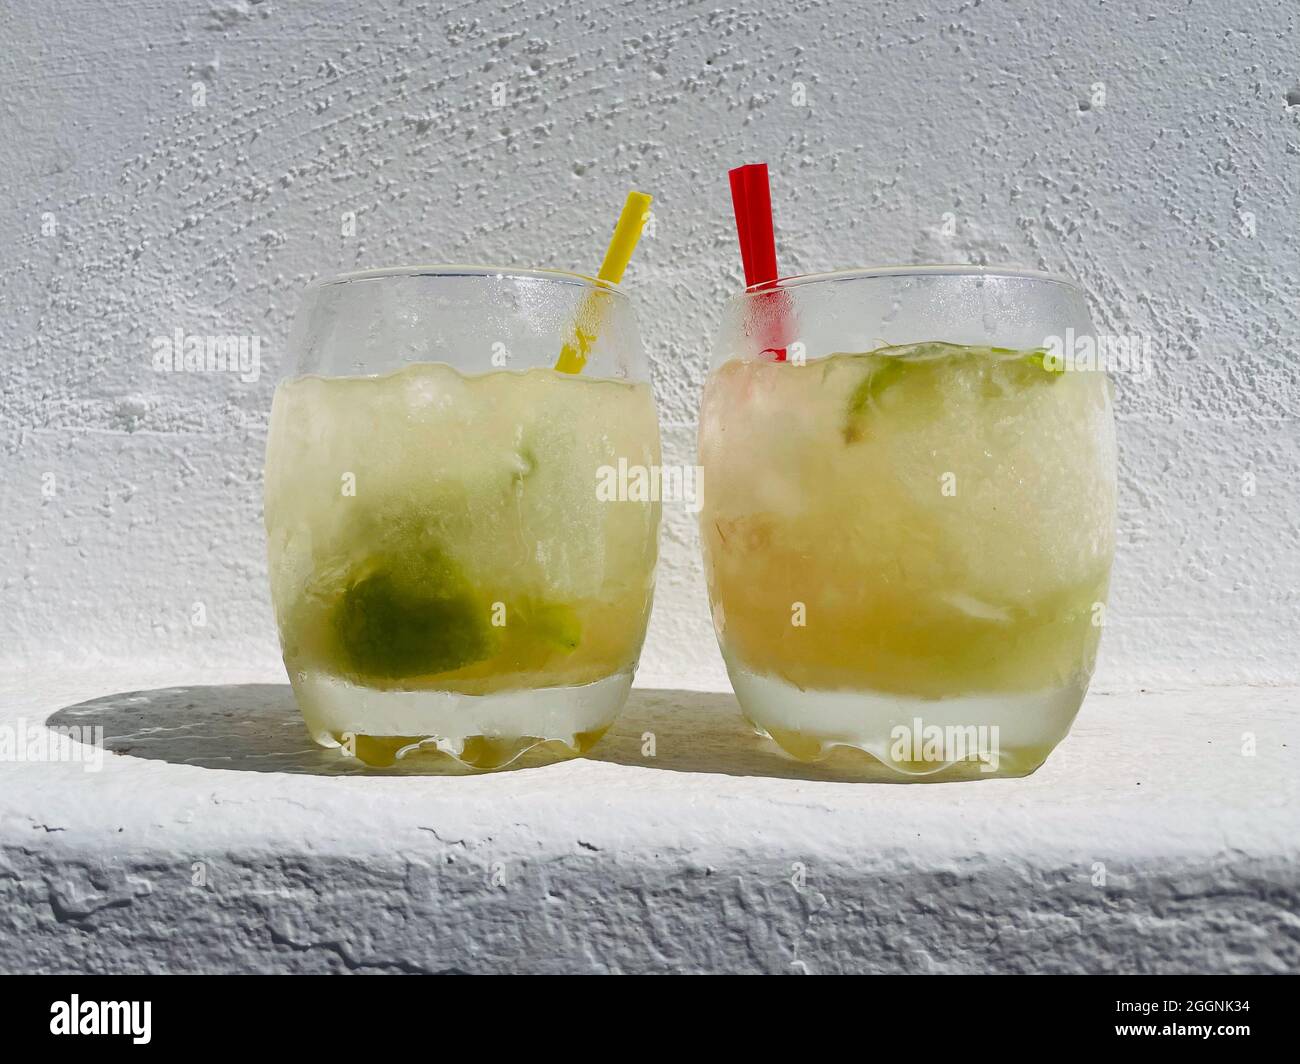 Caipirinha vs caipirinhas. Alcoholic refreshing drink from Brazil with Ice, Lime, cachaça and sugar. Stock Photo